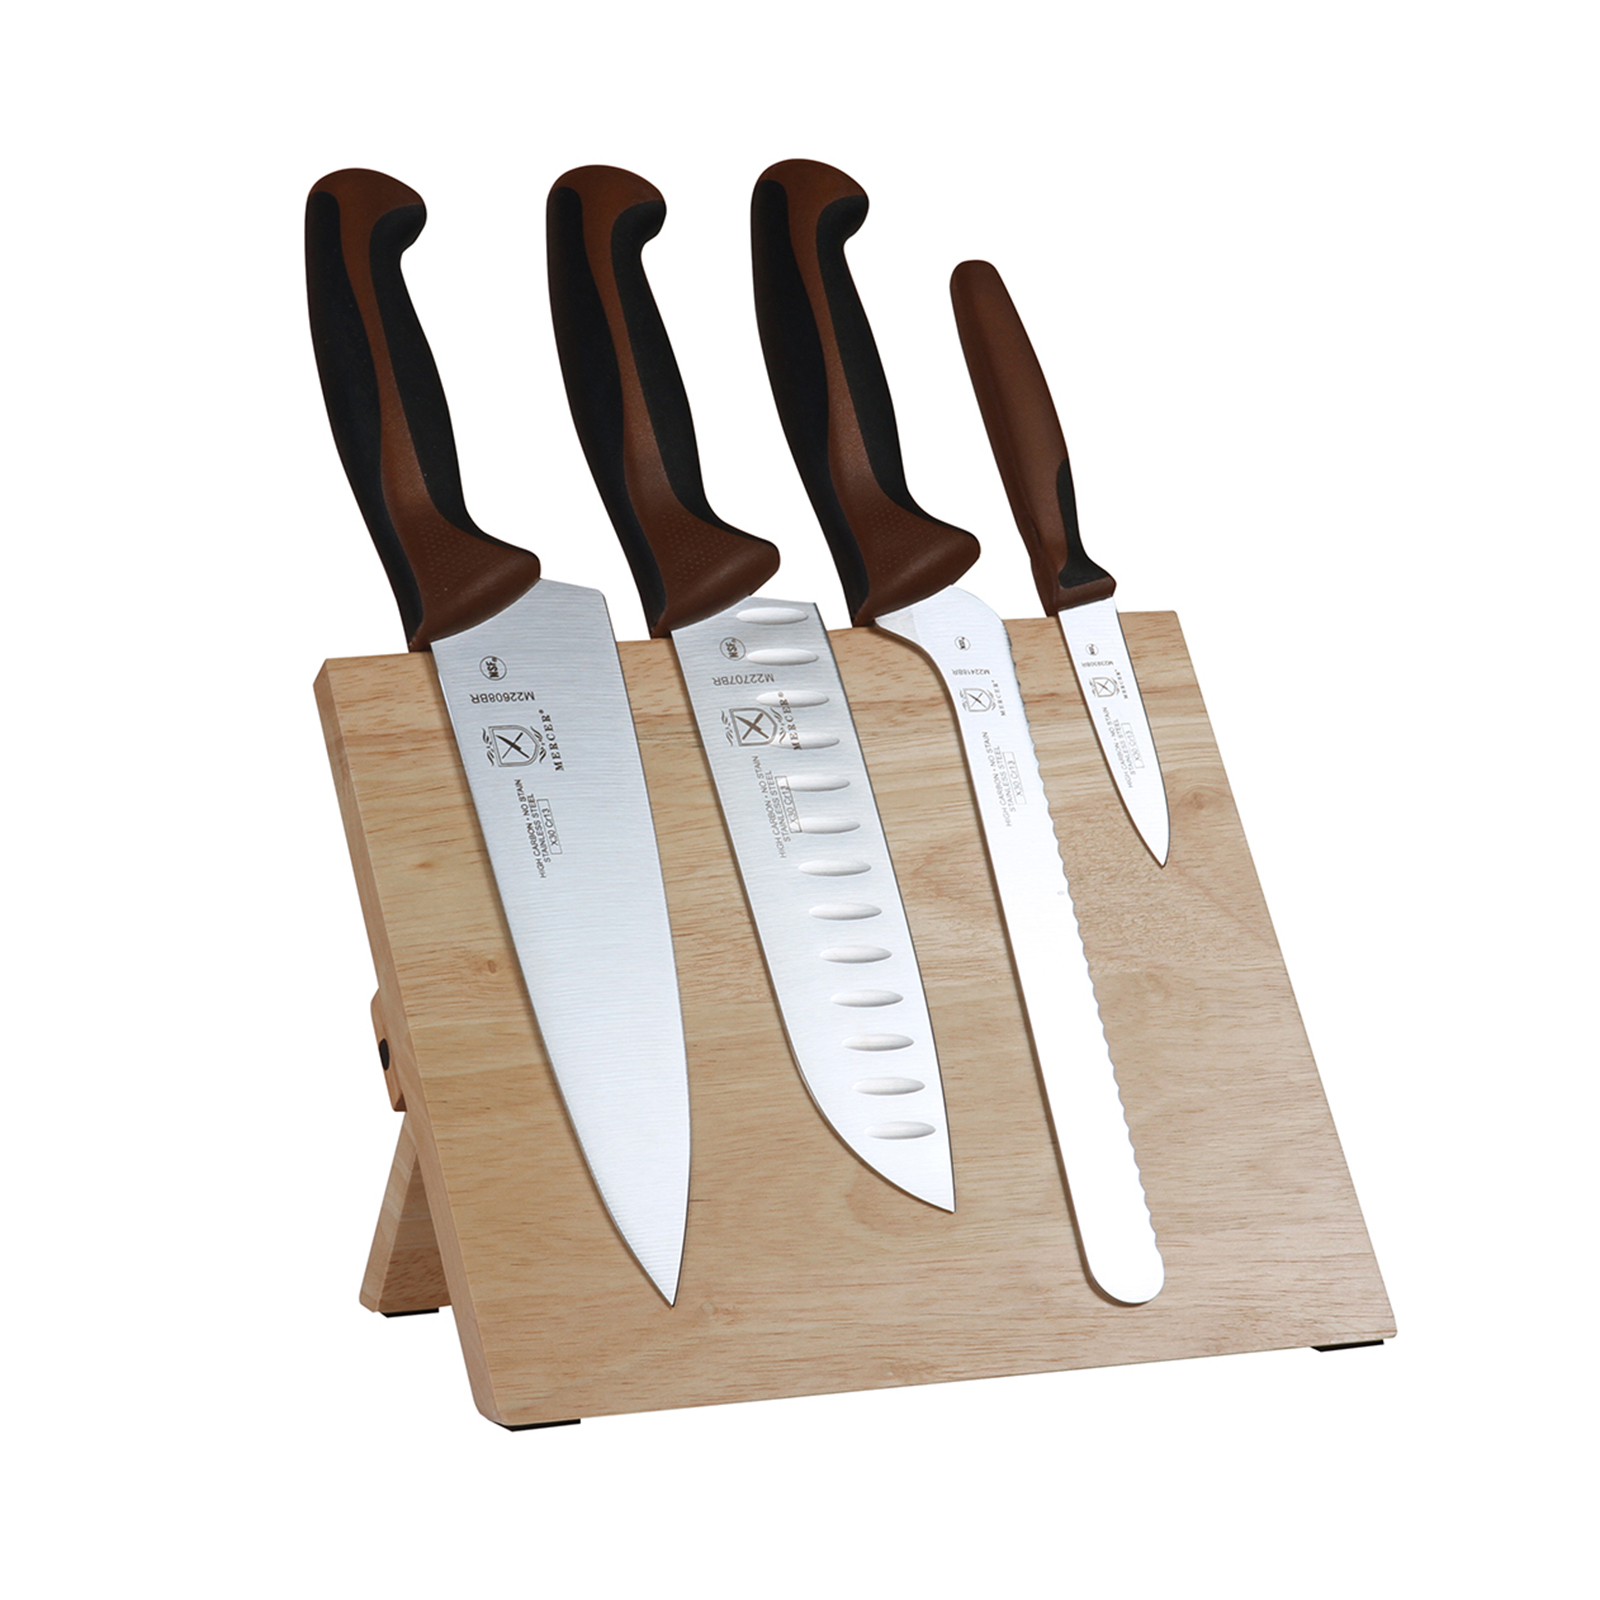 Mercer Culinary M21980BR Knife Set